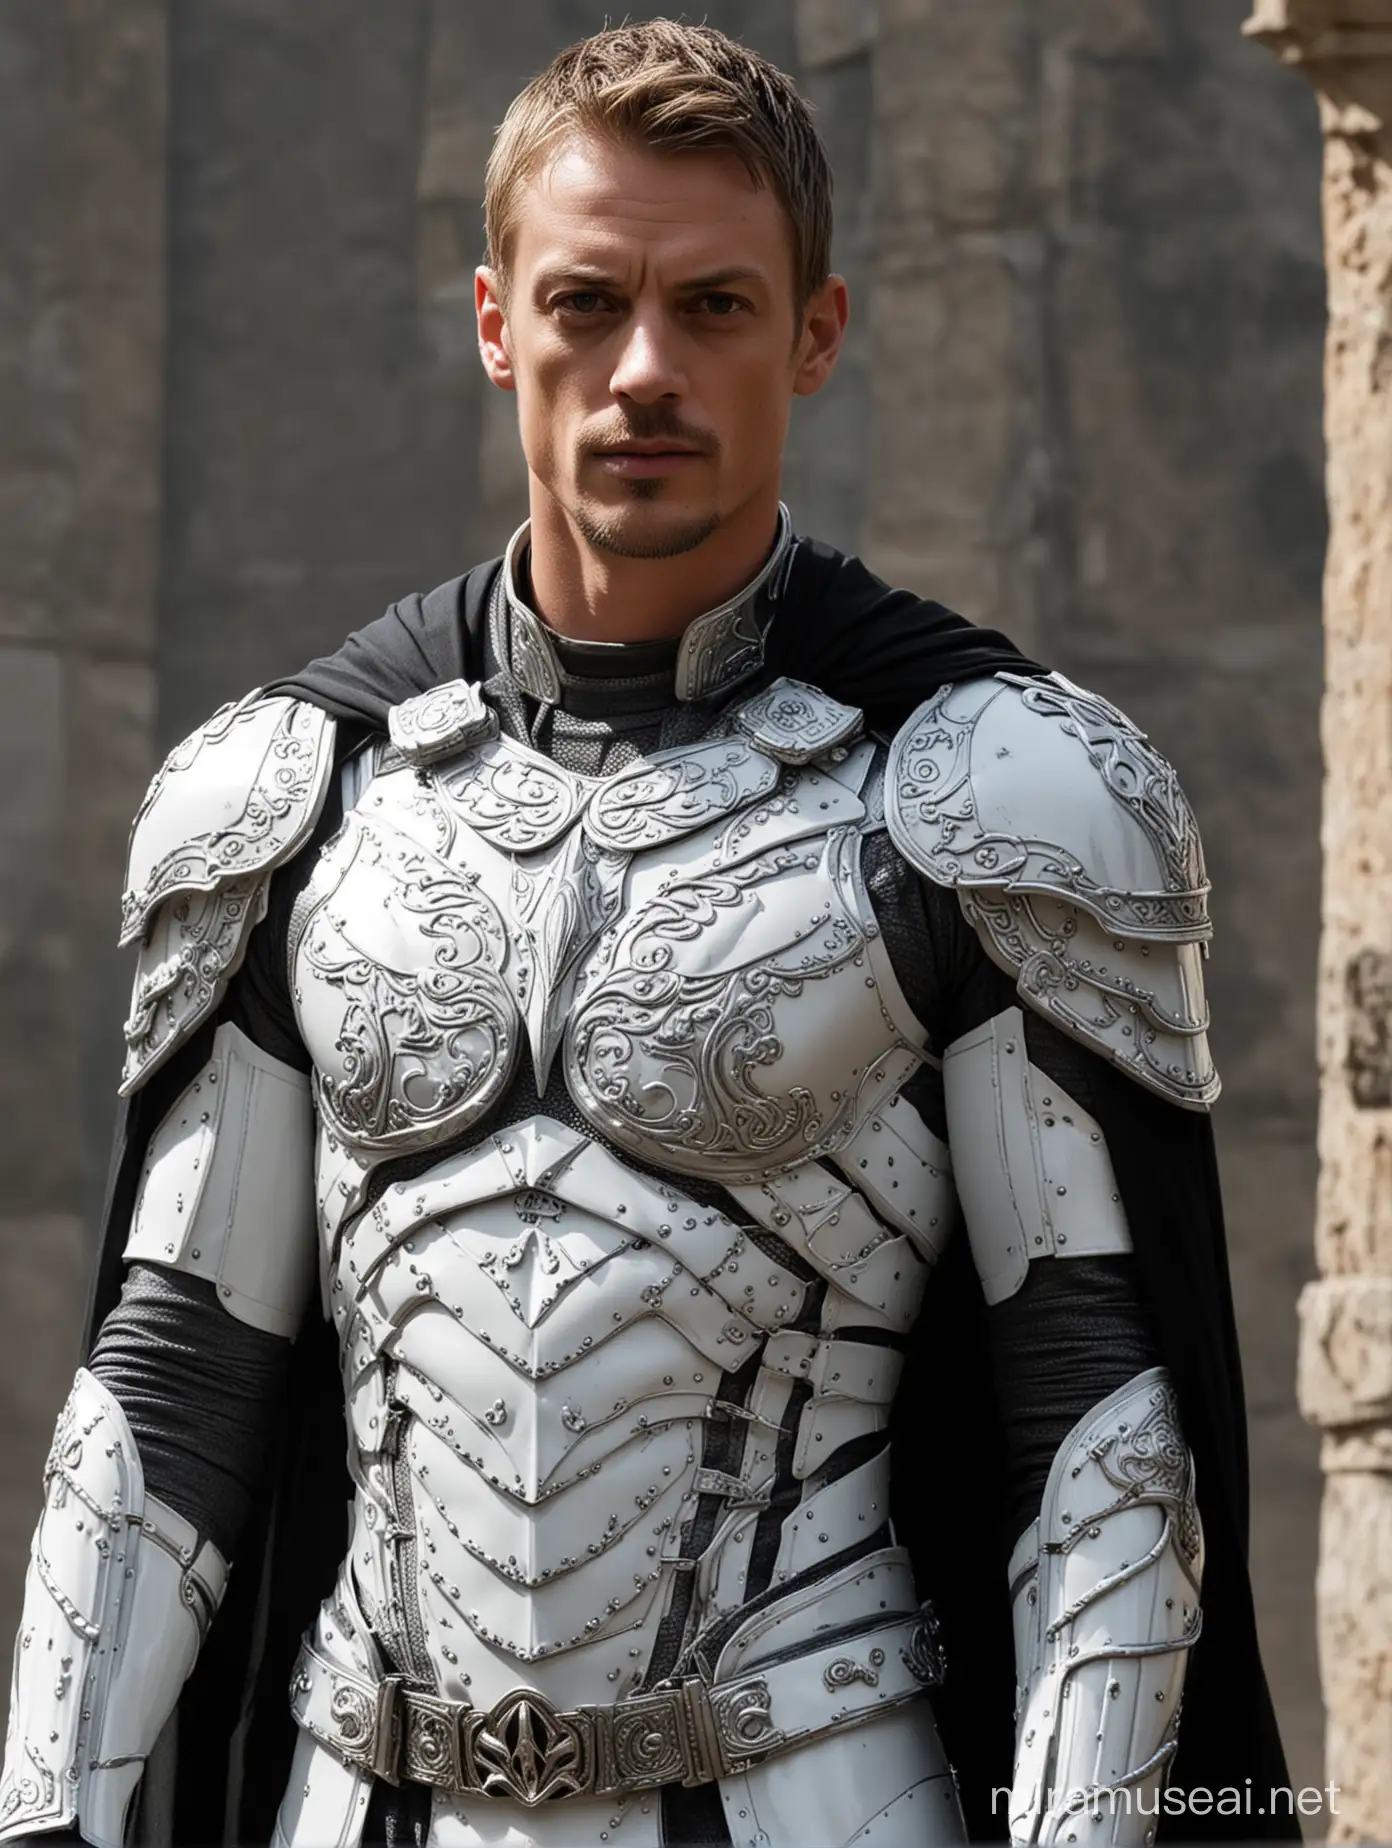 Joel Kinnaman,white armor with silver details, black cape 